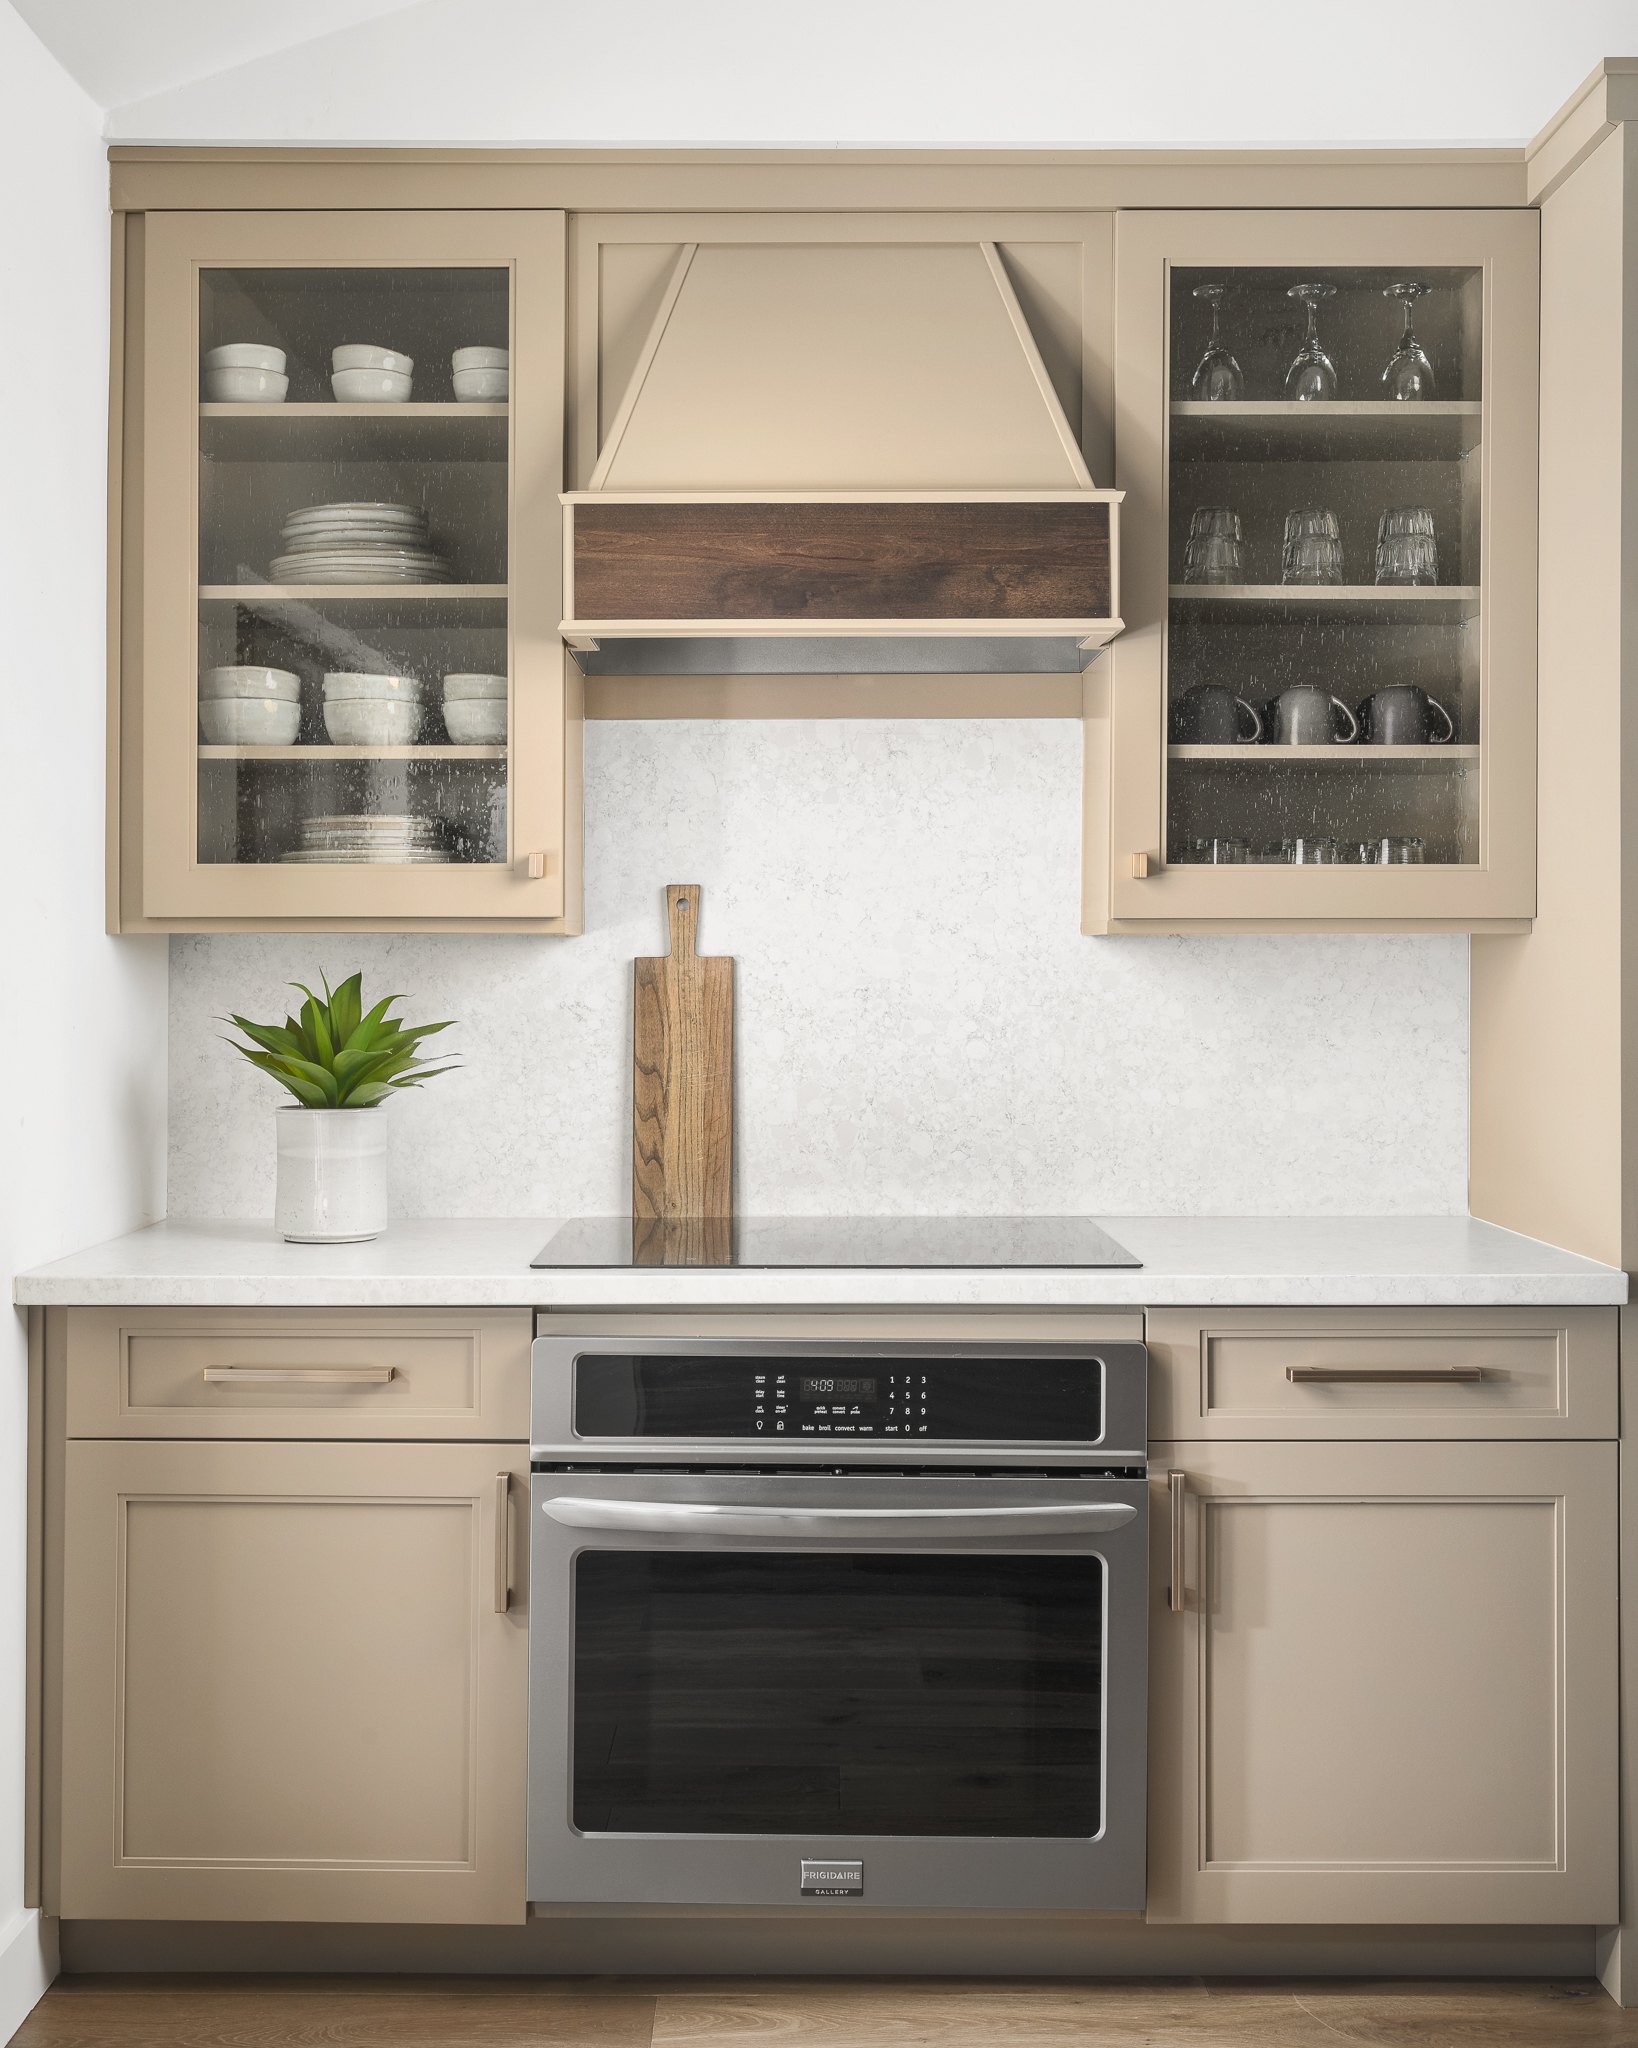 Warm Custom Cabinet Design in Transitional Kitchen